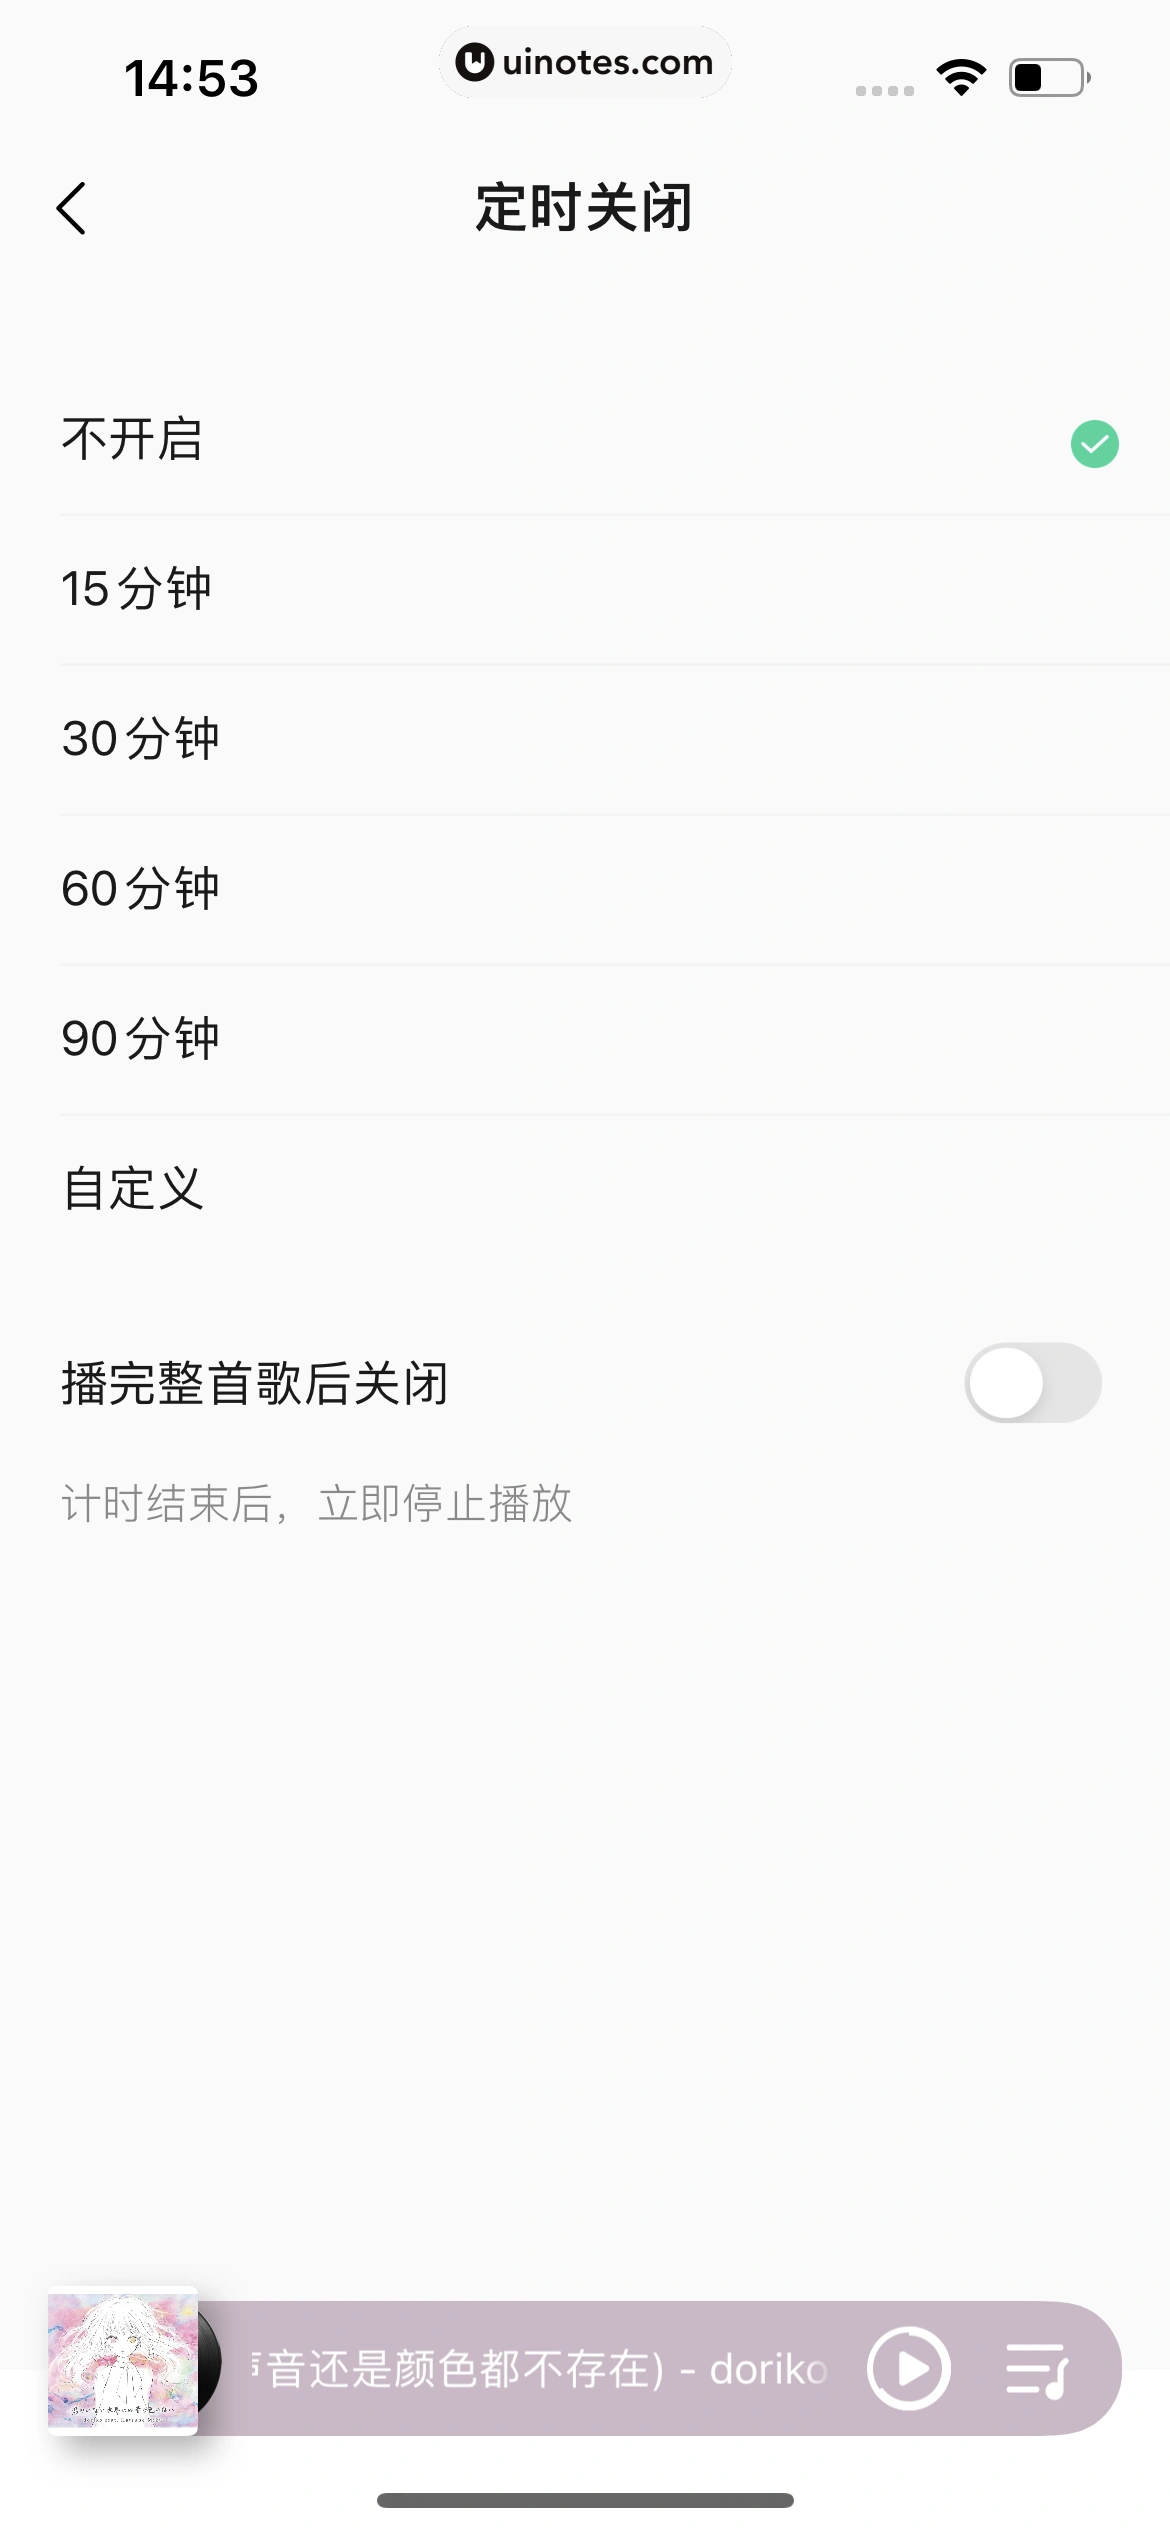 QQ音乐 App 截图 219 - UI Notes